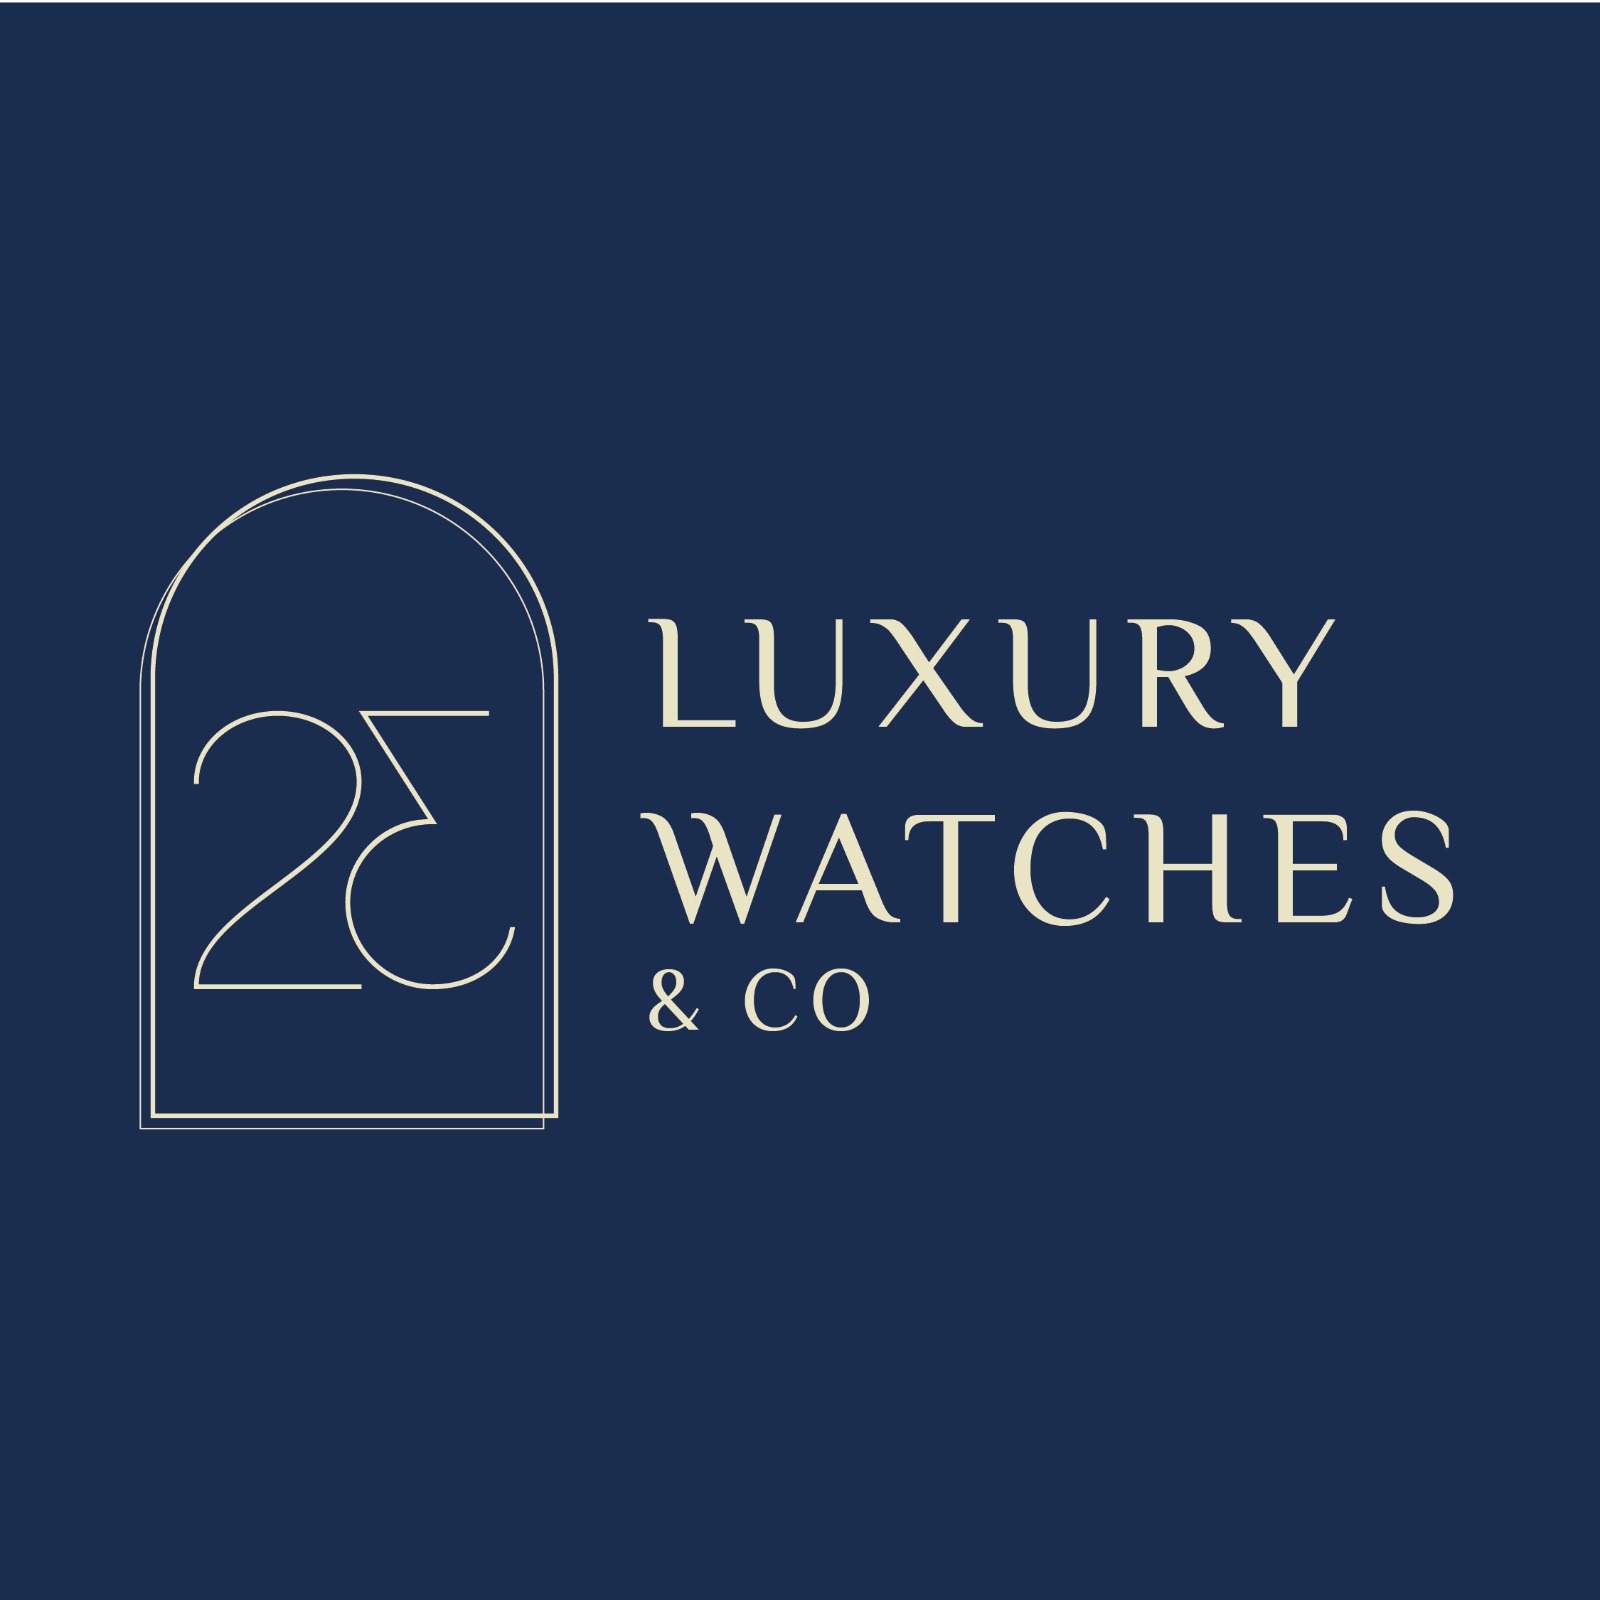 23 Luxury Watches - MondaniWeb